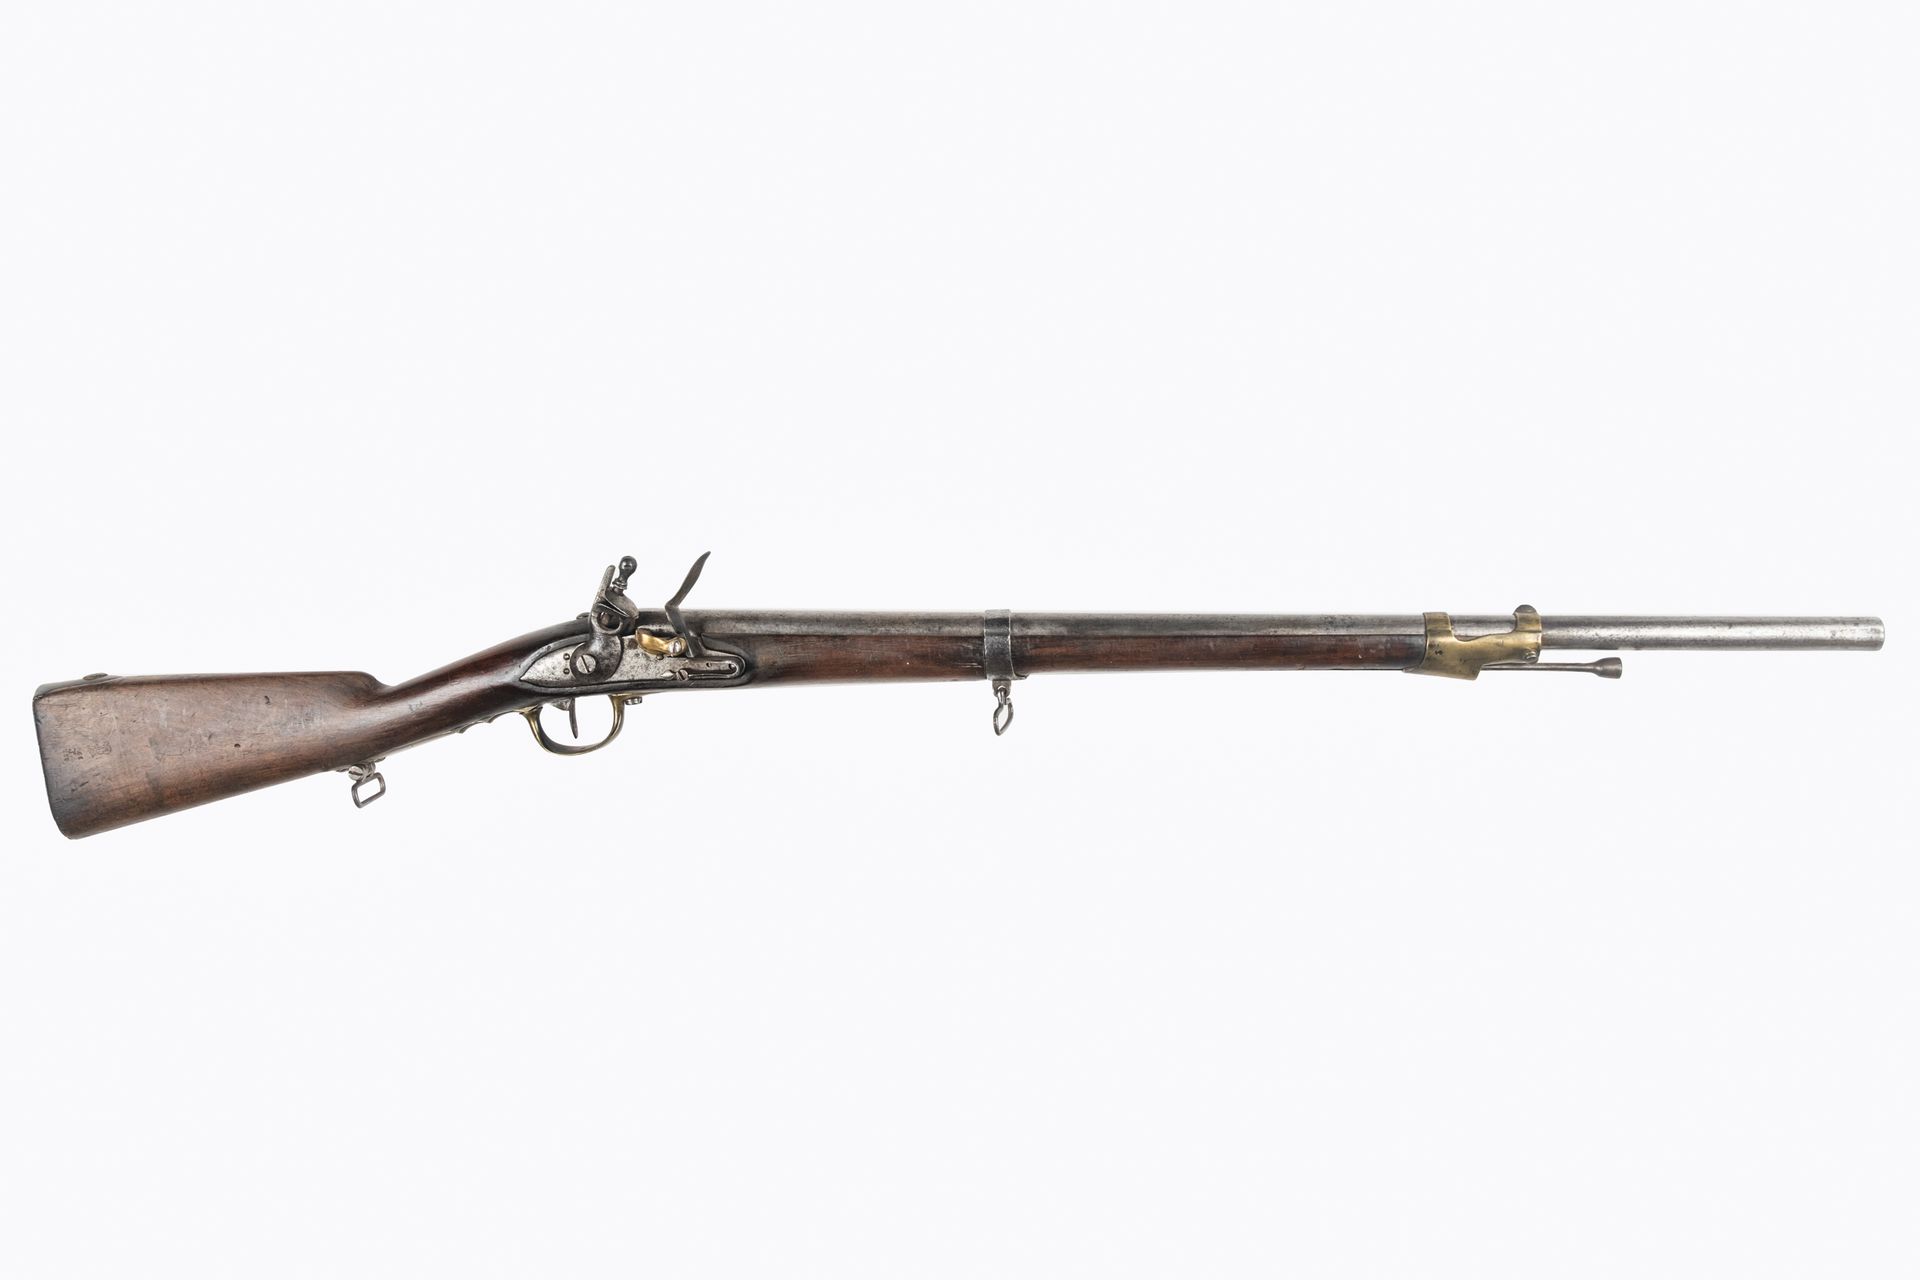 Null 1777型大型骑兵燧发枪

圆形枪管，有雷管，日期为 "86"，并盖有印章。扁体锁和圆体锤。冲孔的黄铜枪口和配件。铁棒。铁制拉杆。胡桃木腮托，印有 "&hellip;